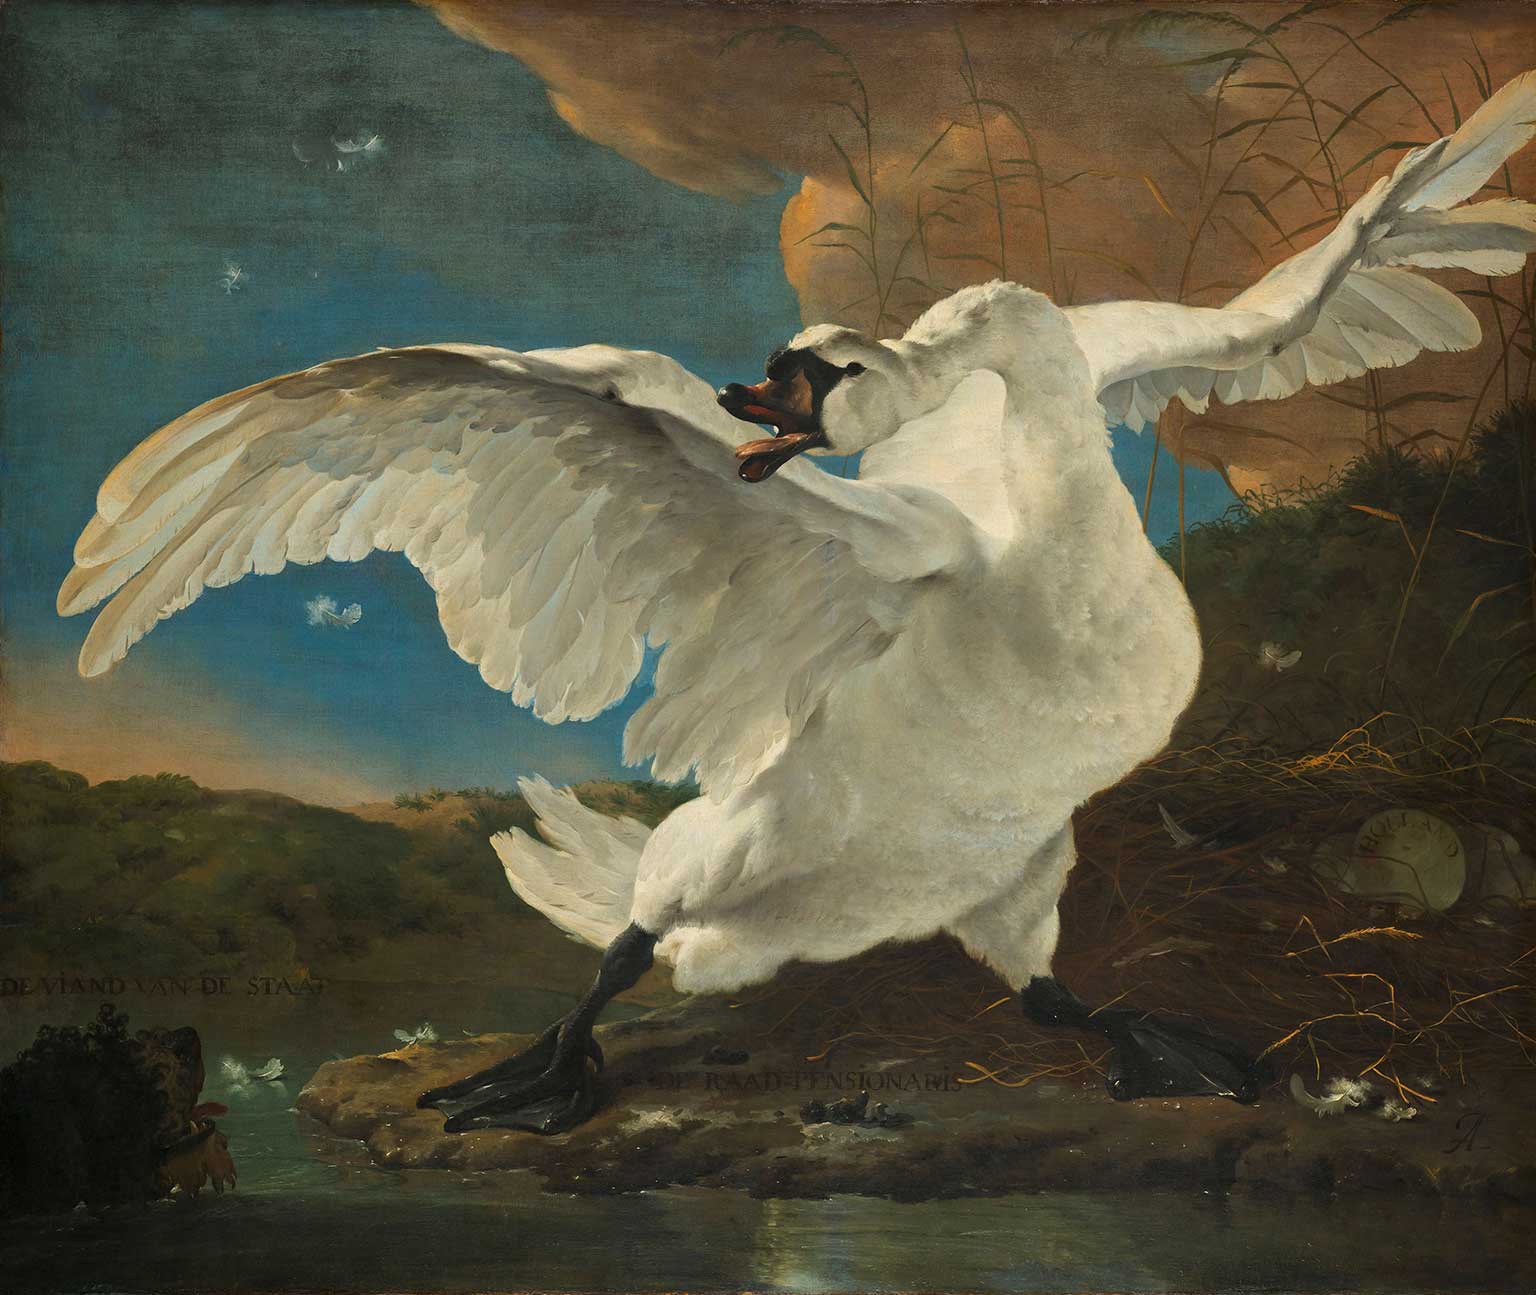 Painting The Threatened Swan by Jan Asselijn, from around 1650